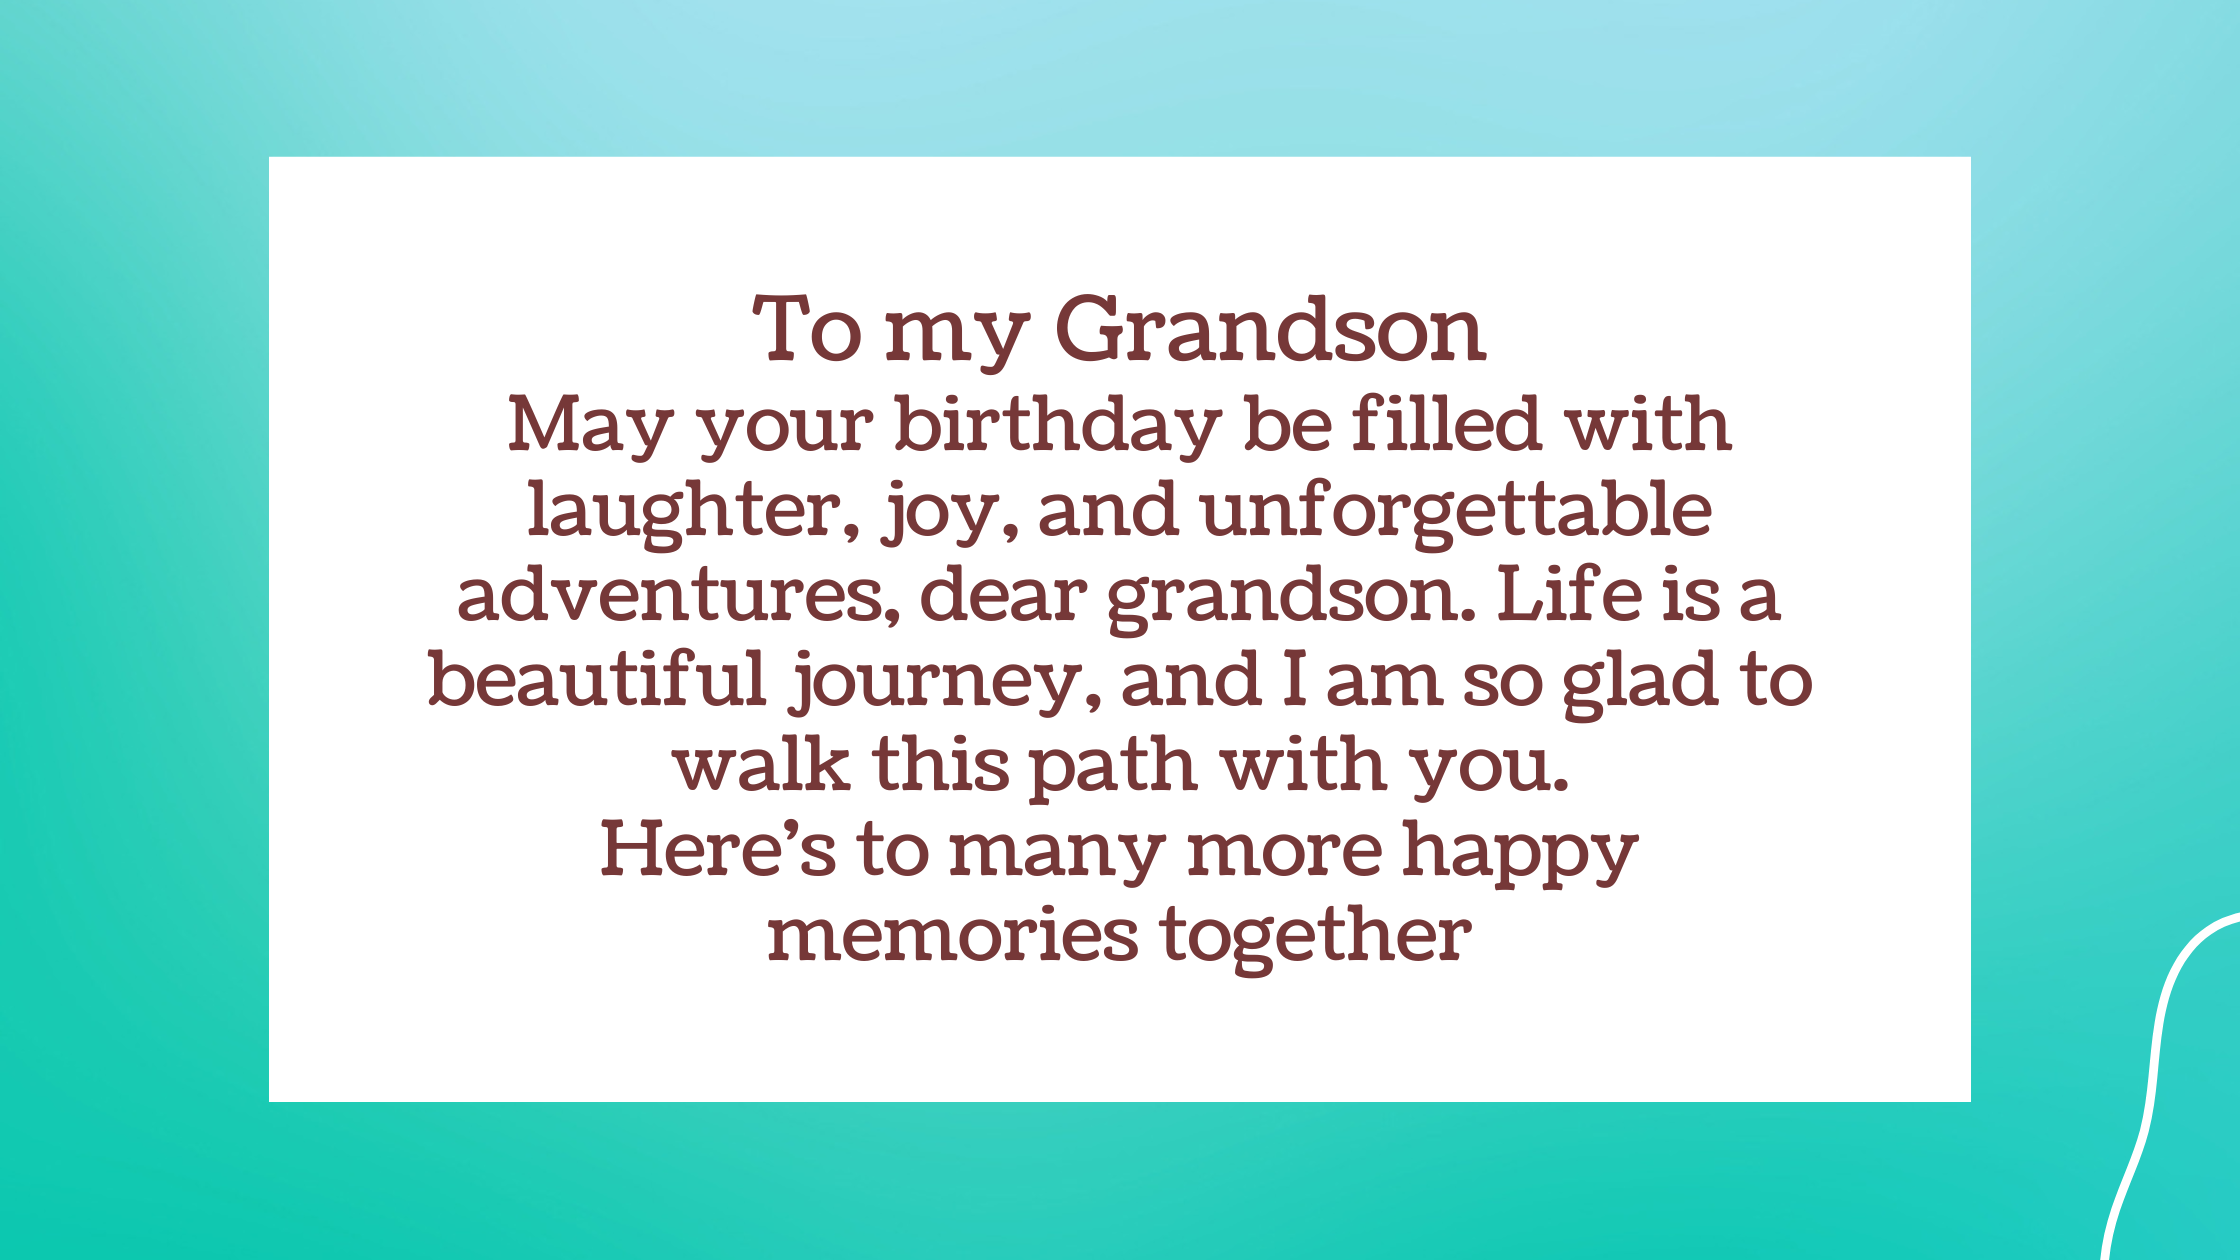 10 Heartwarming Birthday Wishes to My Grandson: Celebrating Love Across Generations 🎂